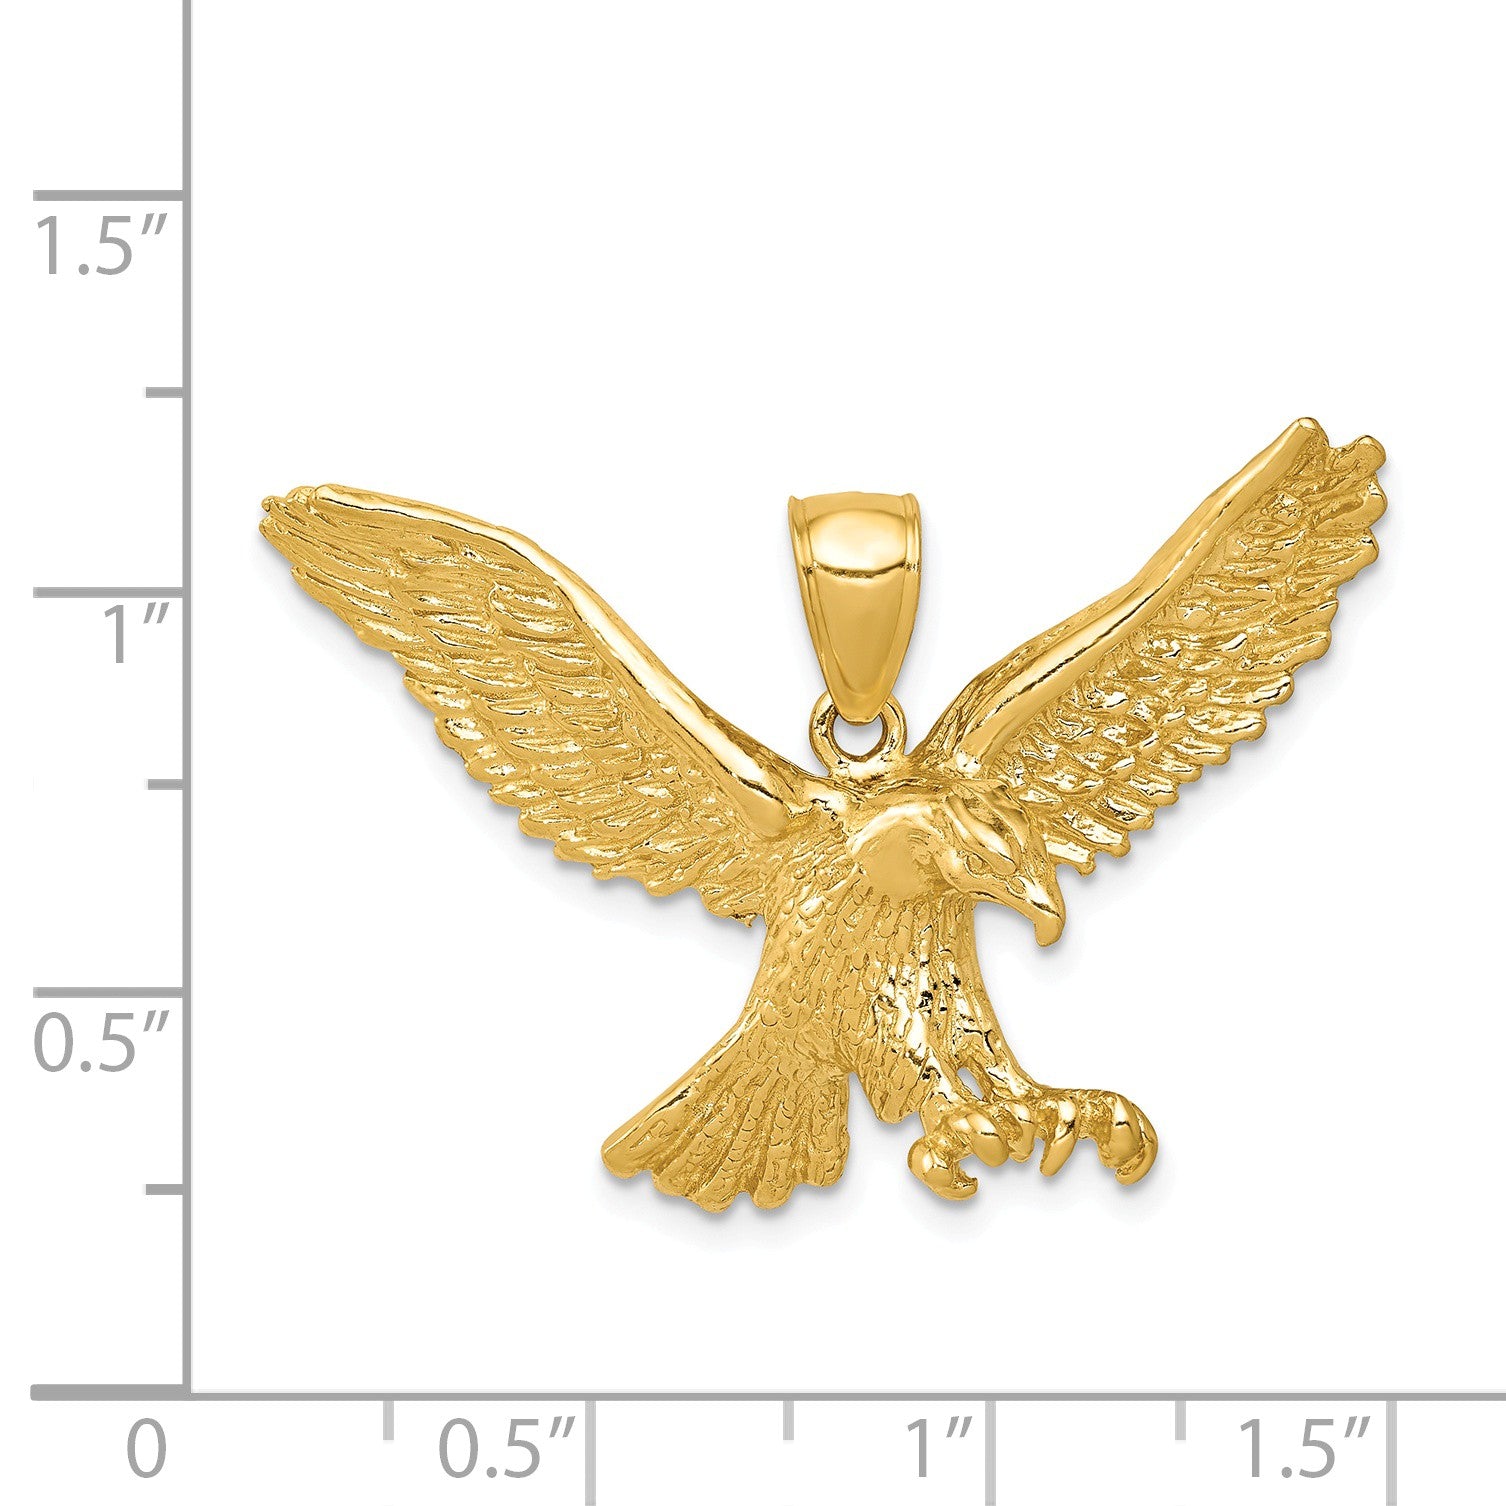 Winged Key Necklace 14K Yellow Gold w/ Platinum